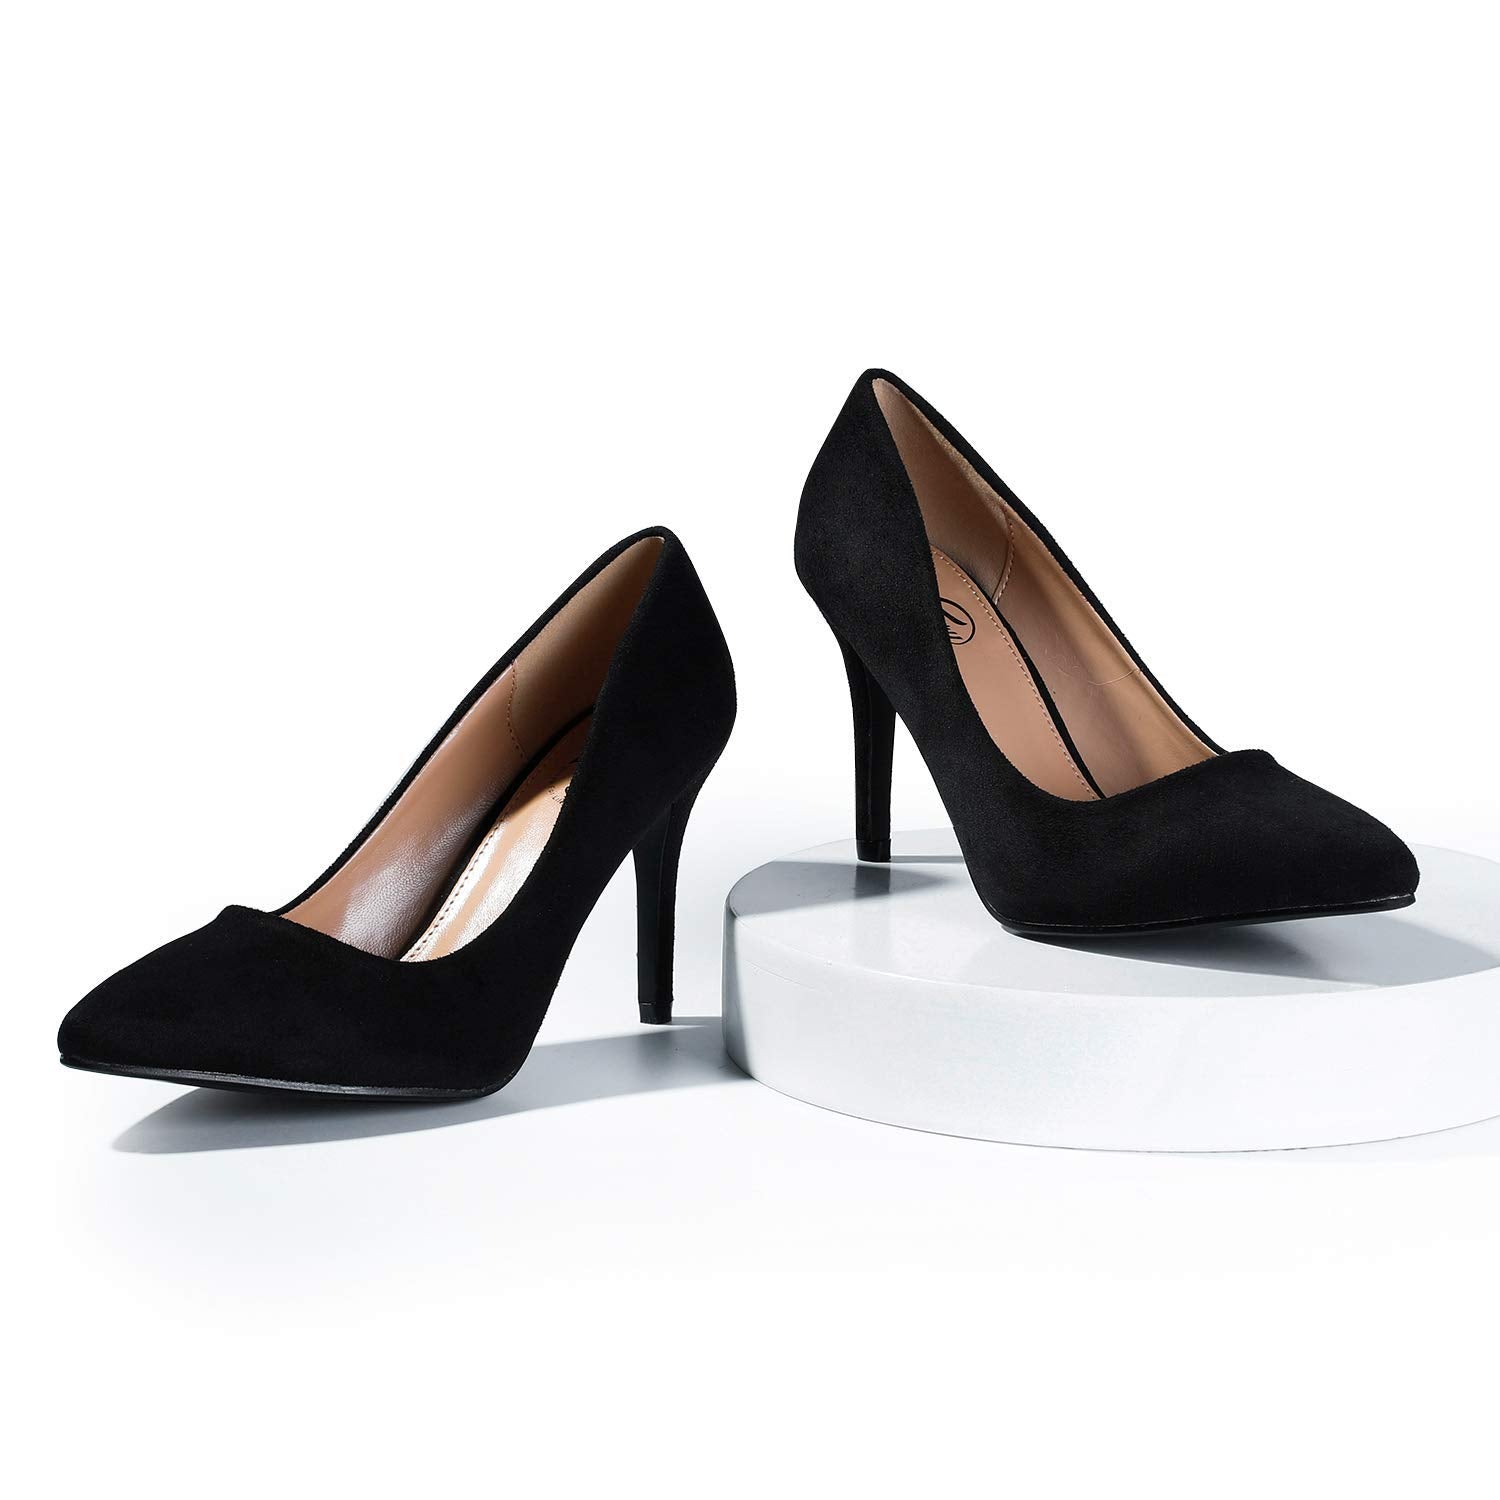 Women's handmade high heels slingback sandals in black suede leather